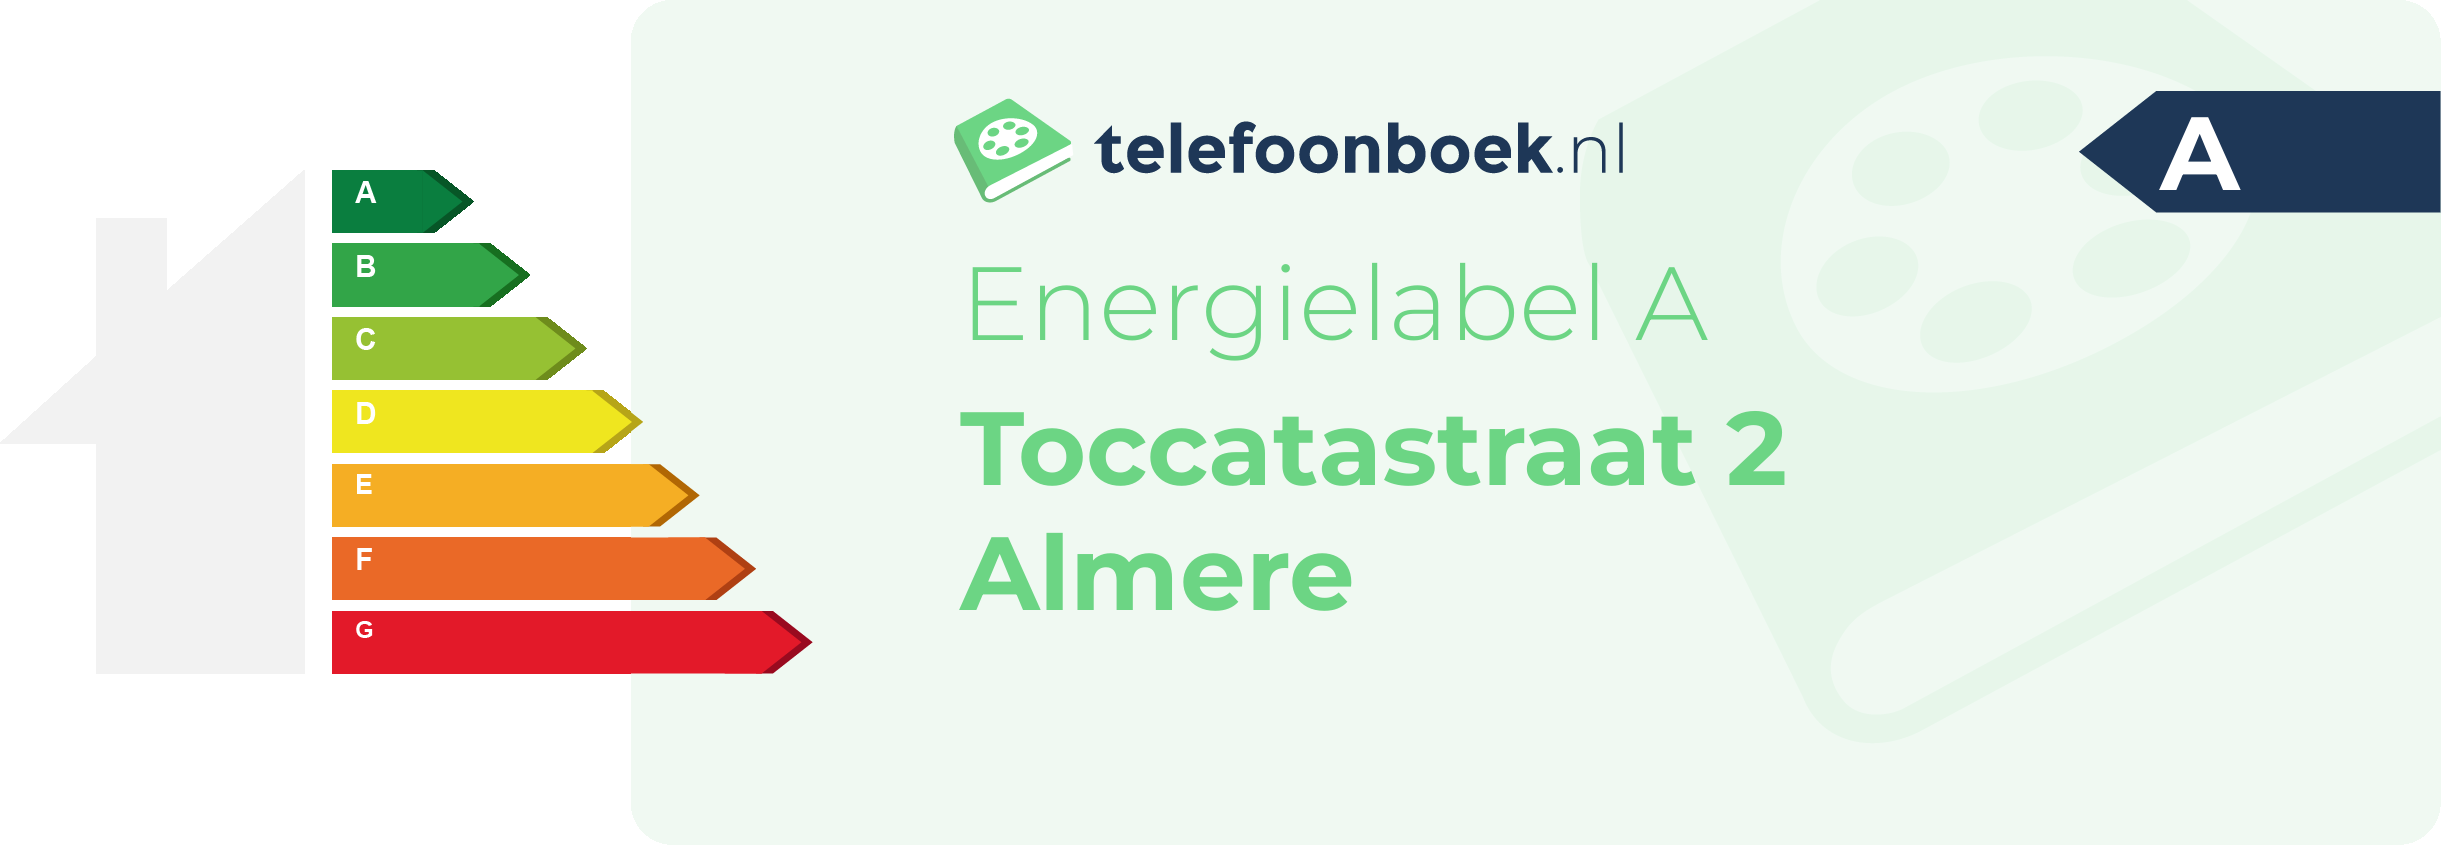 Energielabel Toccatastraat 2 Almere